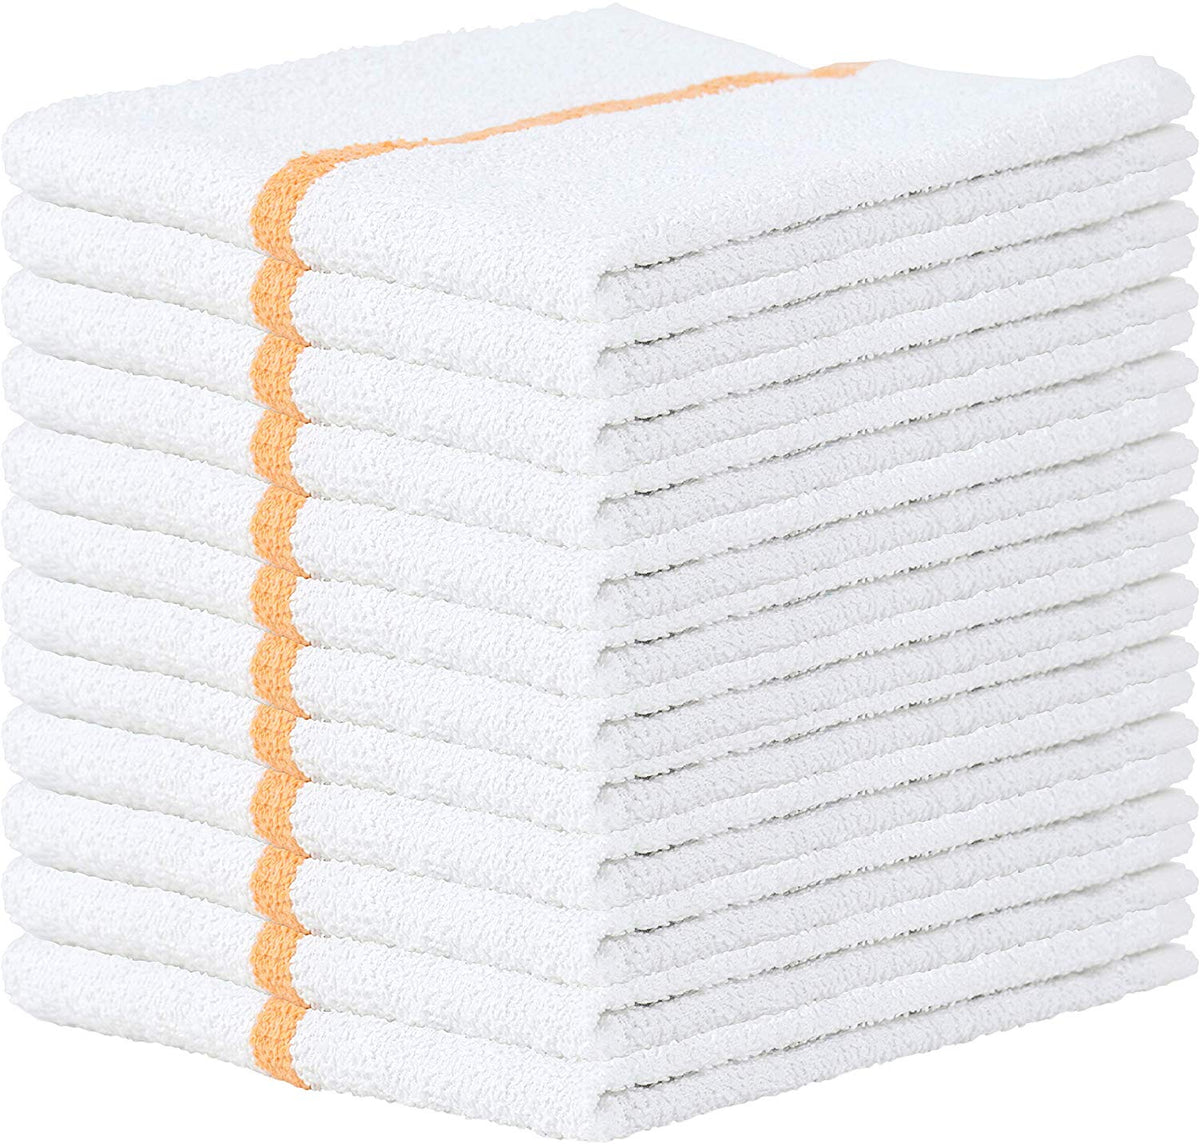 GOLD TEXTILES New Cotton Blend White Restaurant Bar Mops Kitchen Towels  (36, Blue Stripe)